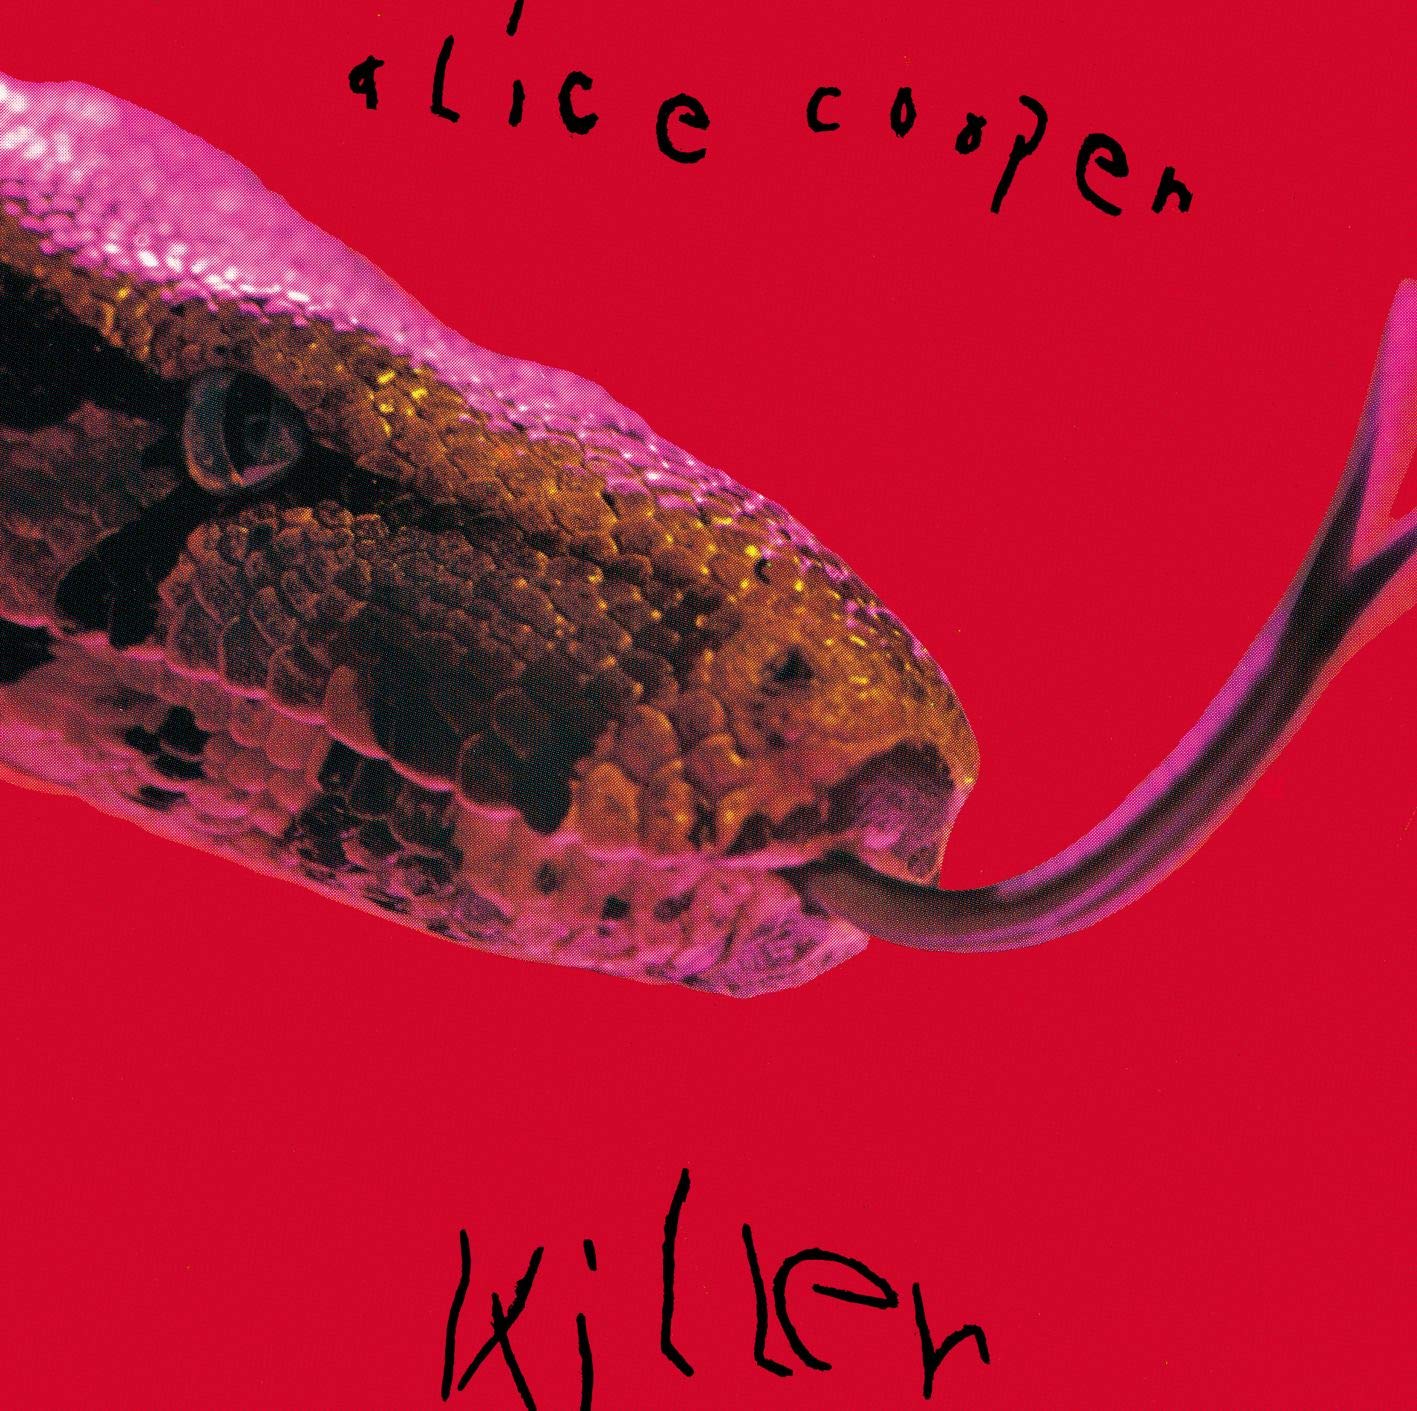 Alice Cooper Killer recensione